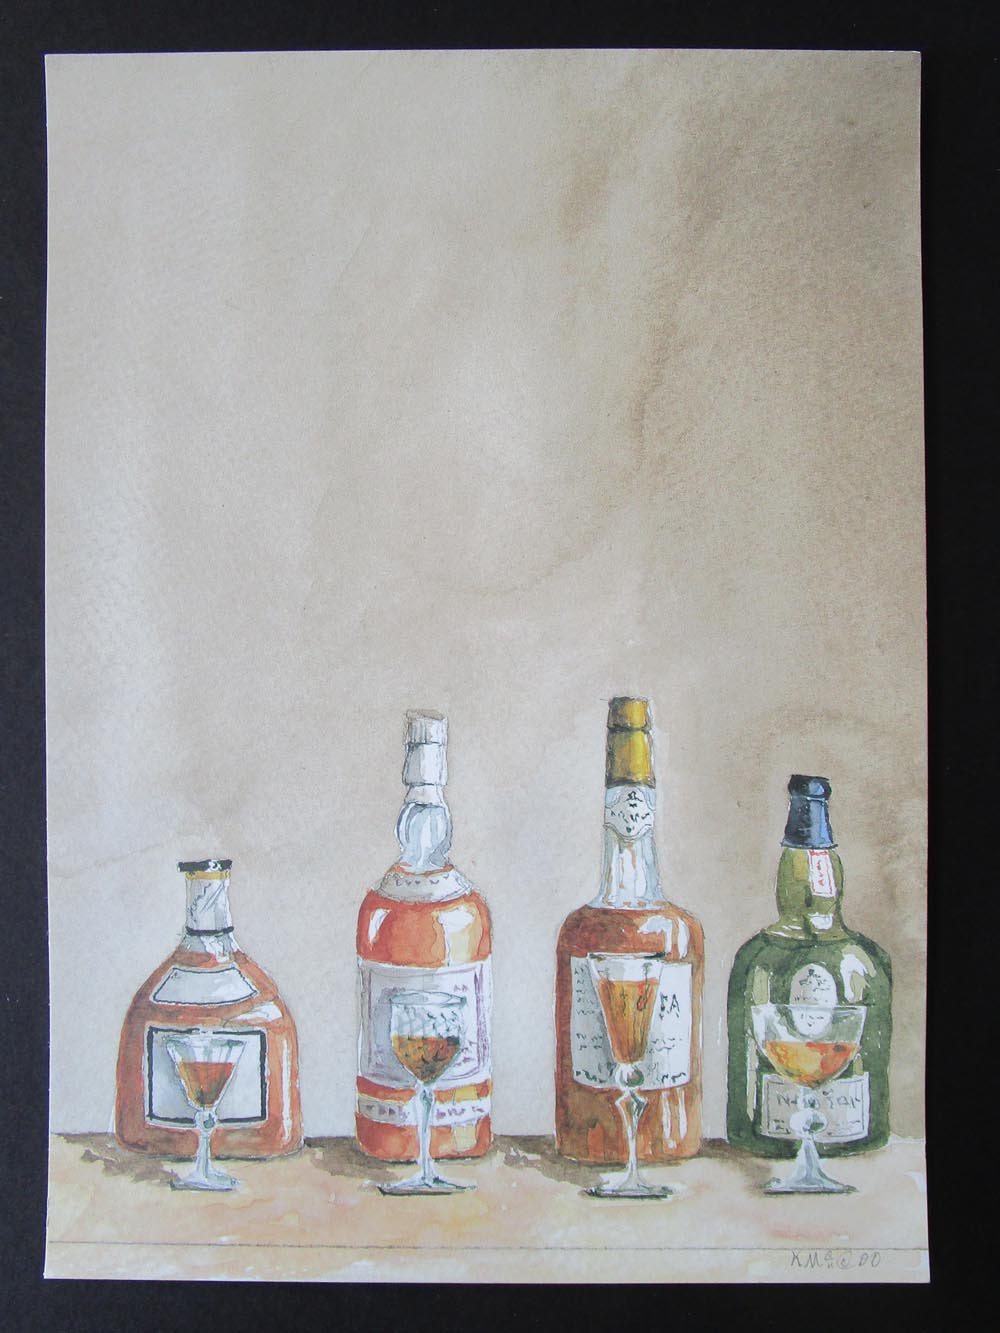 Liquor bottles invite - Designs by Ginny